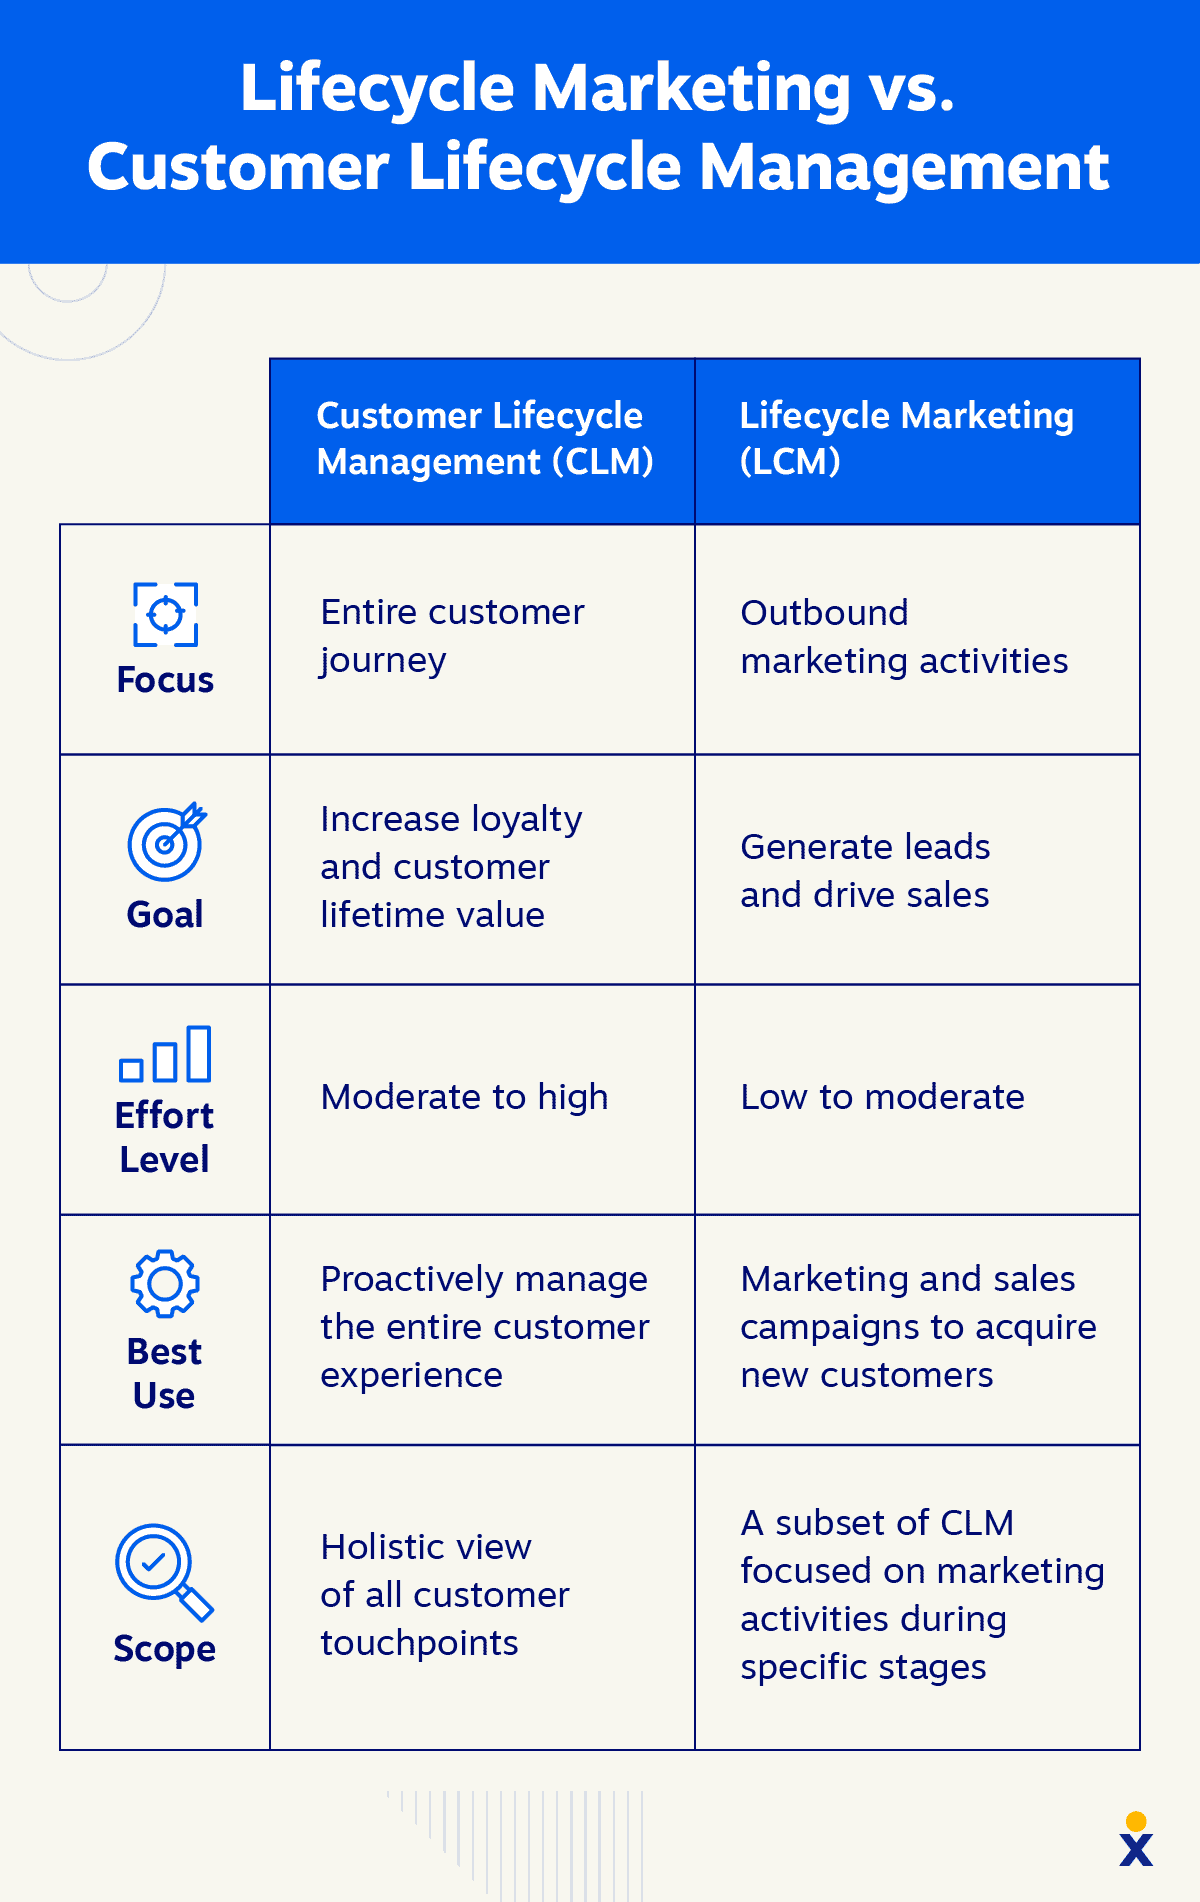 Lifecycle Marketing vs. Customer Lifecycle Management